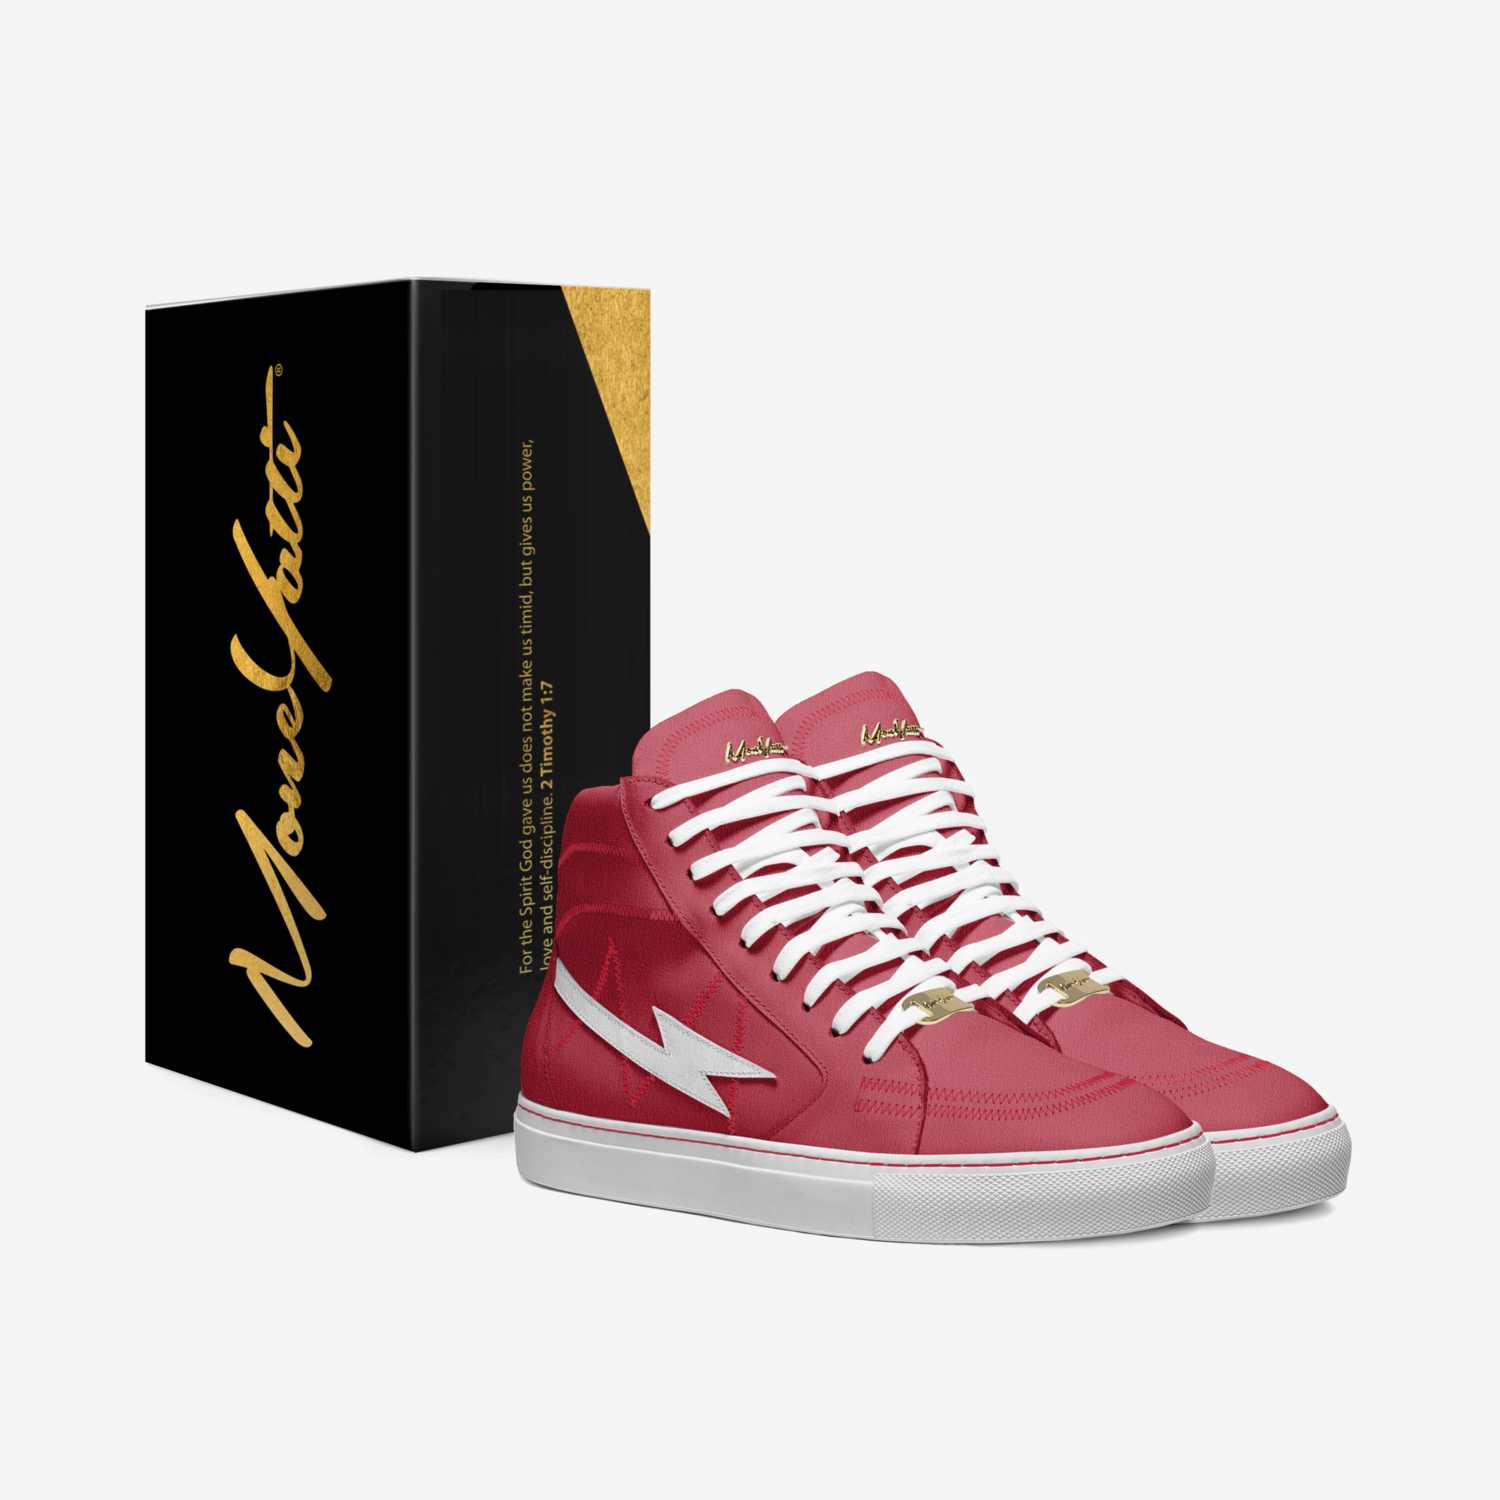 MONEYATTI REBEL 03 custom made in Italy shoes by Moneyatti Brand | Box view